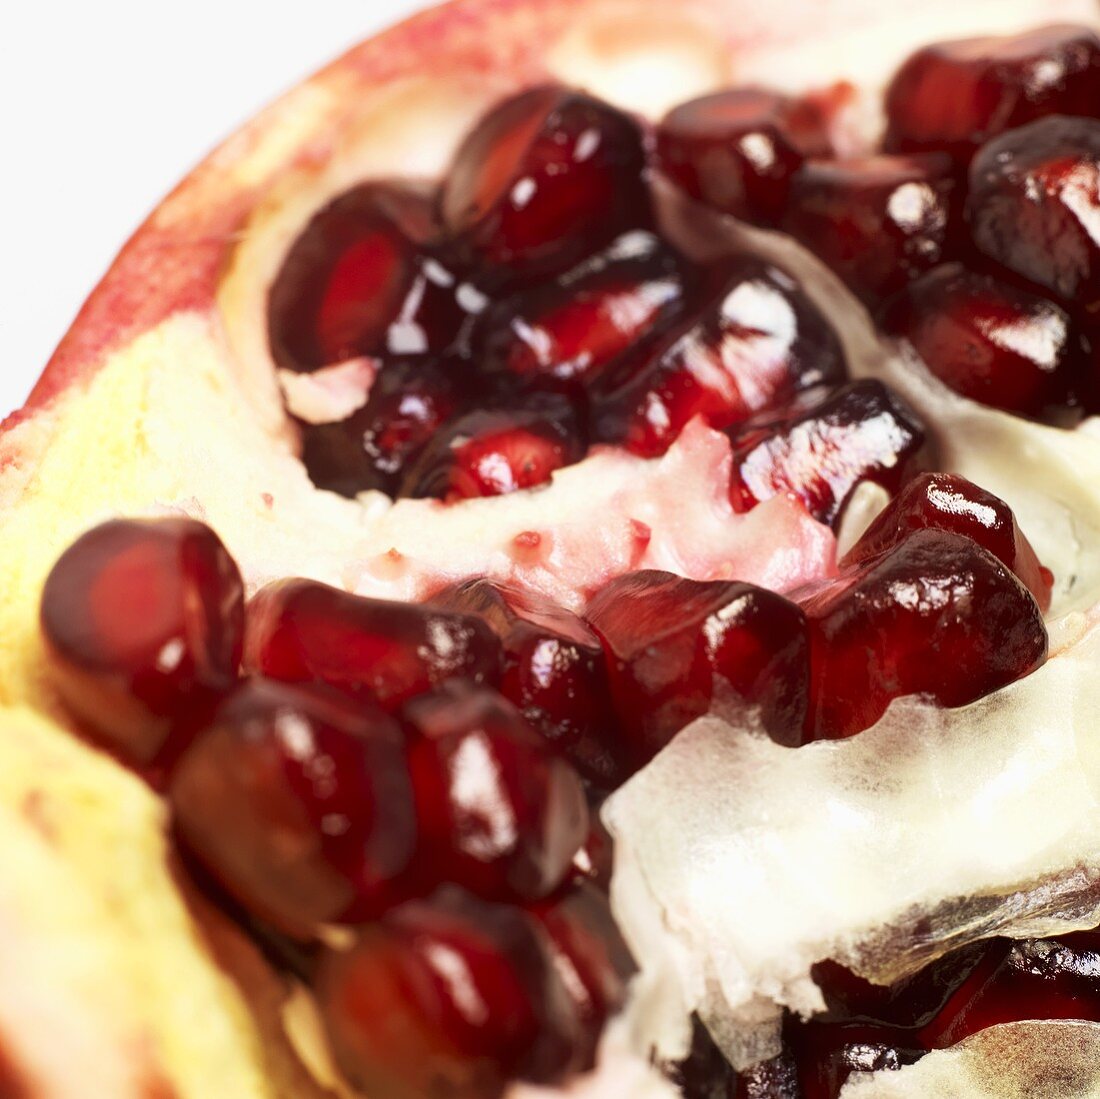 Half a pomegranate, close-up